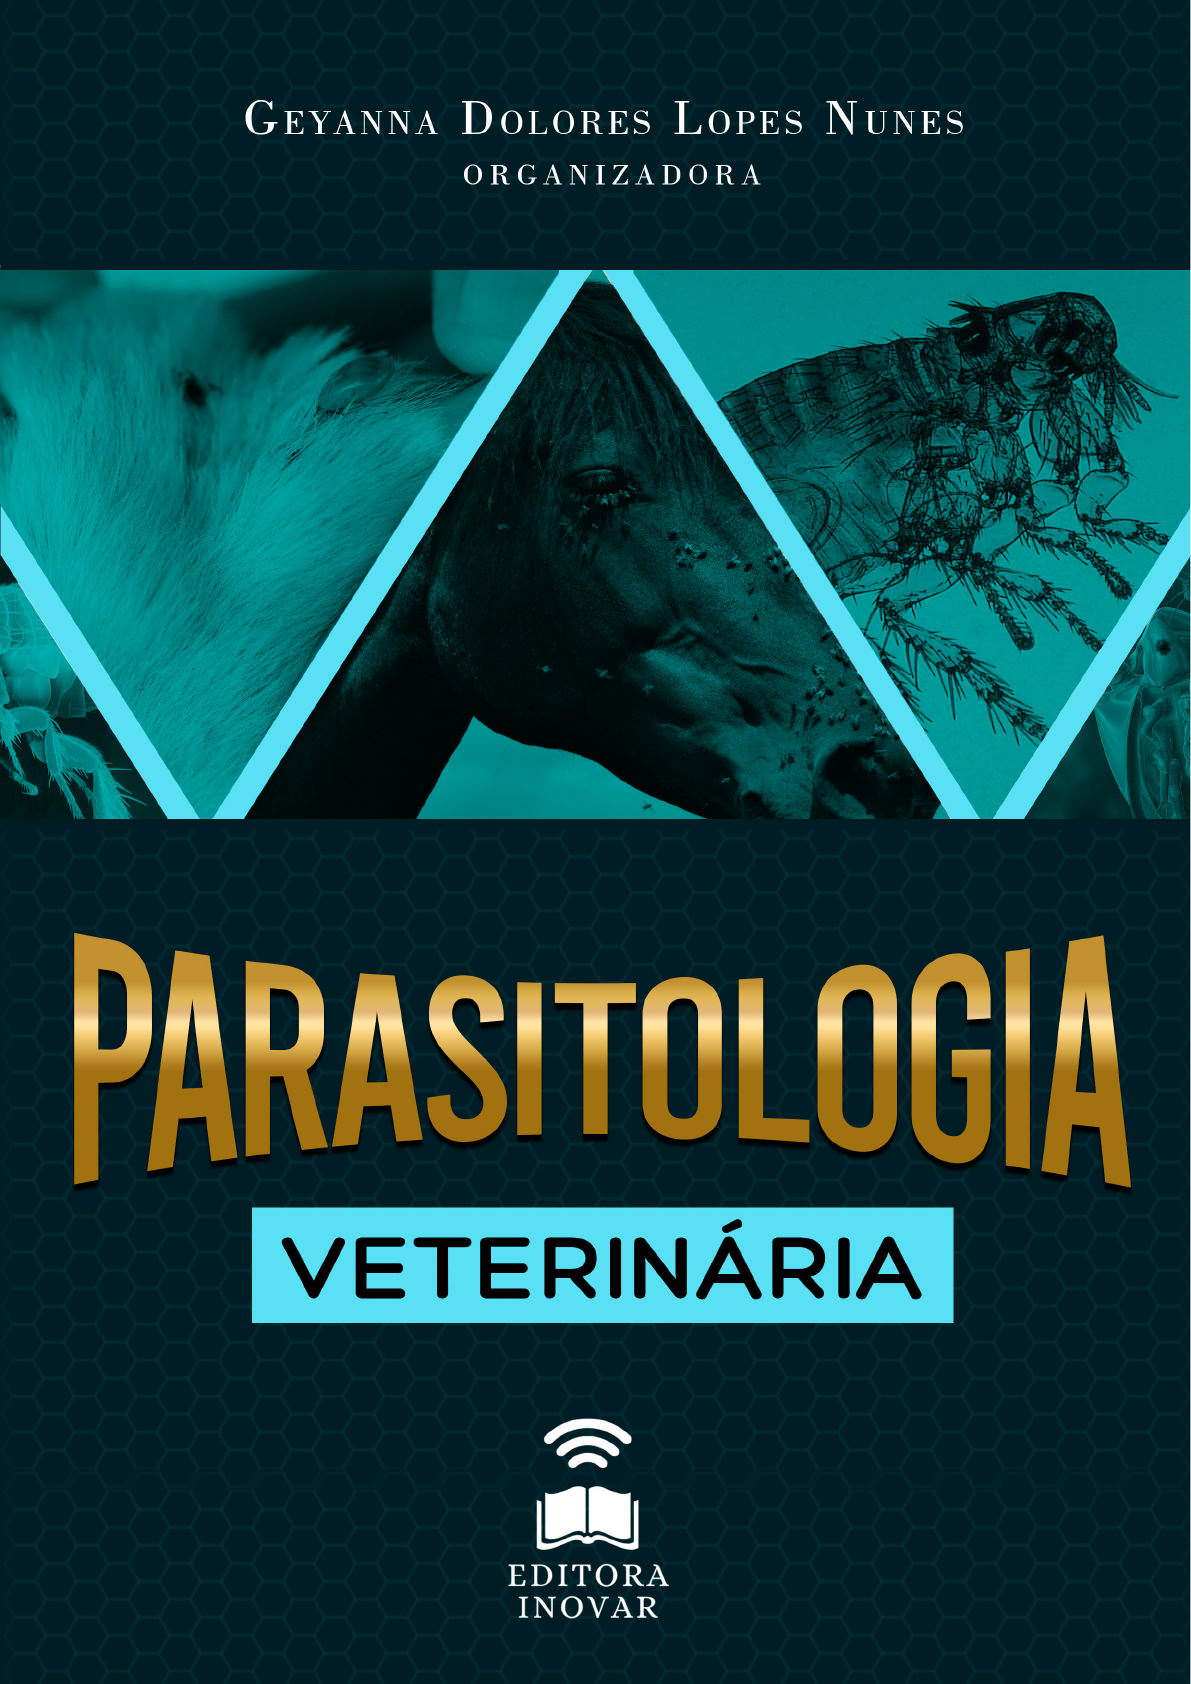 Allana Nunes Cardoso Barbosa - Veterinário - Medicina Veterinária